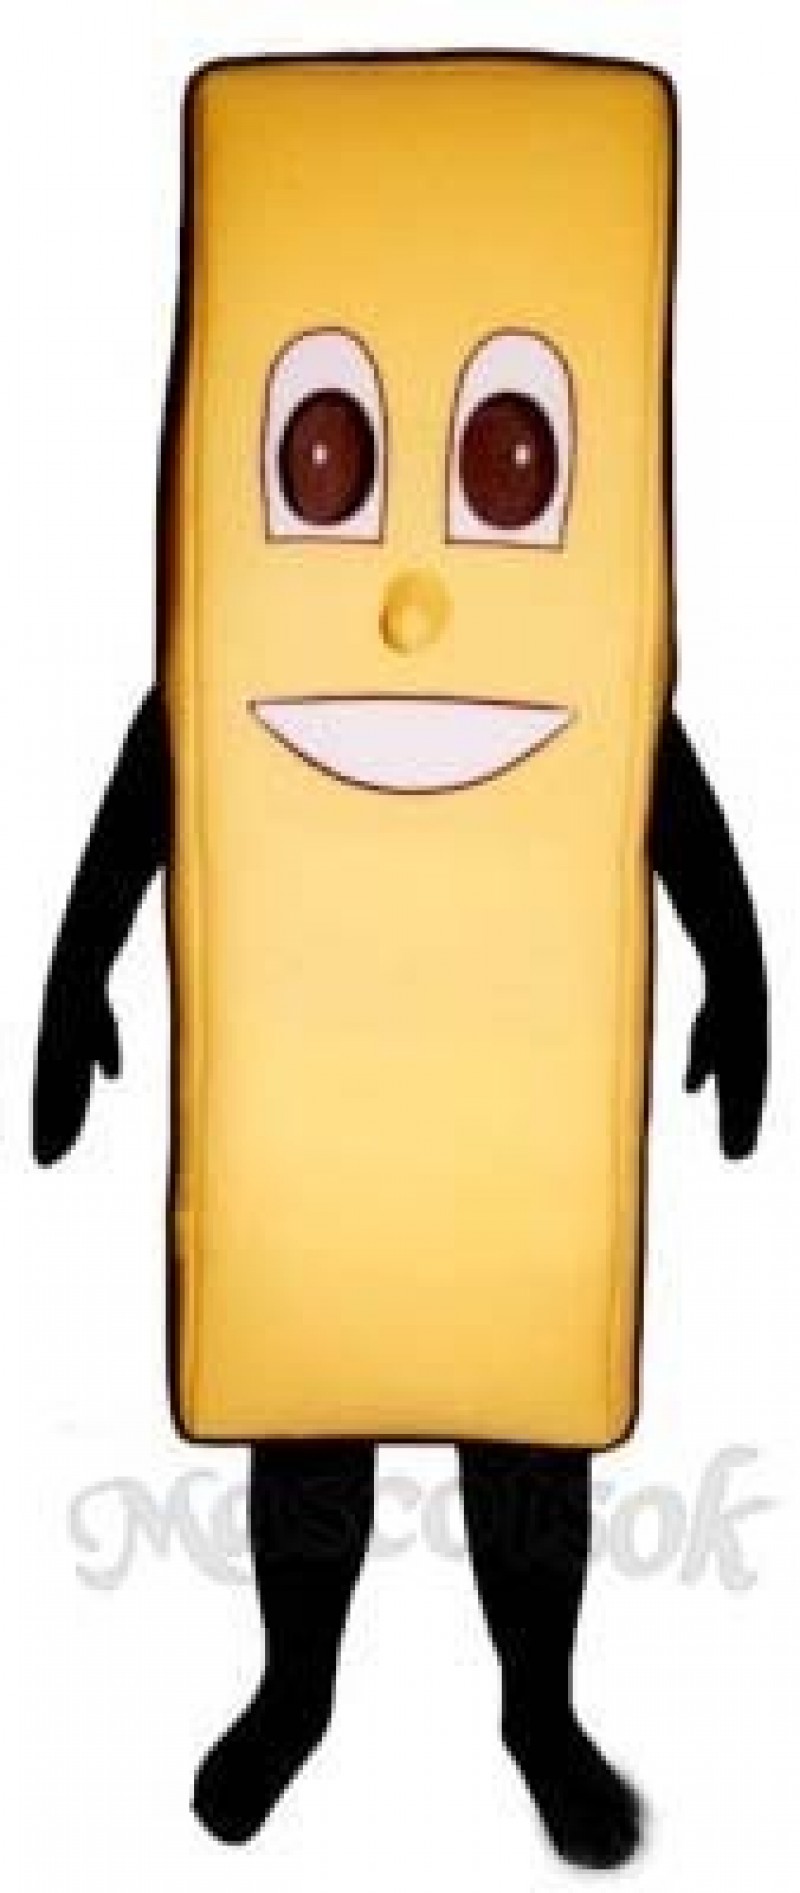 Fried Tater Mascot Costume